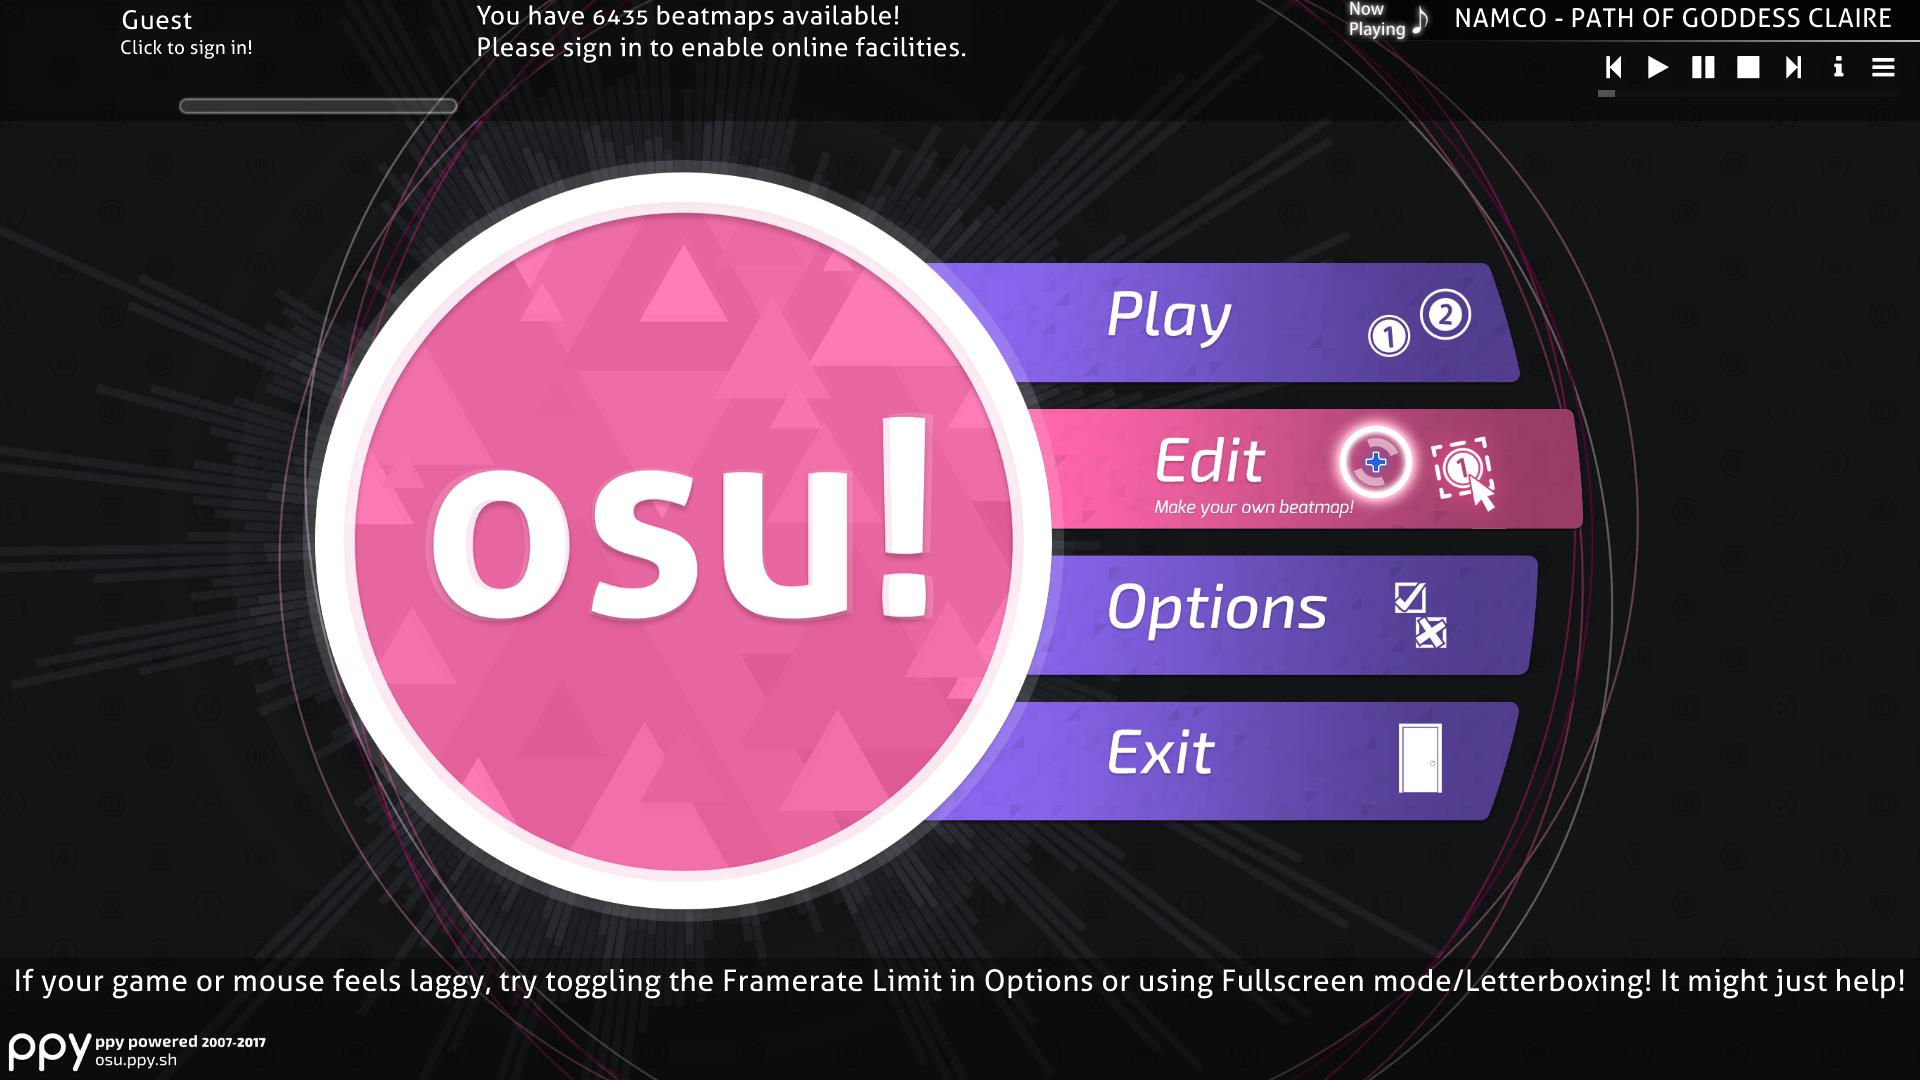 (Opsu!) - (Osu!Droid) - (Osu lazer) Gameplay (Auto) Which one is better. 